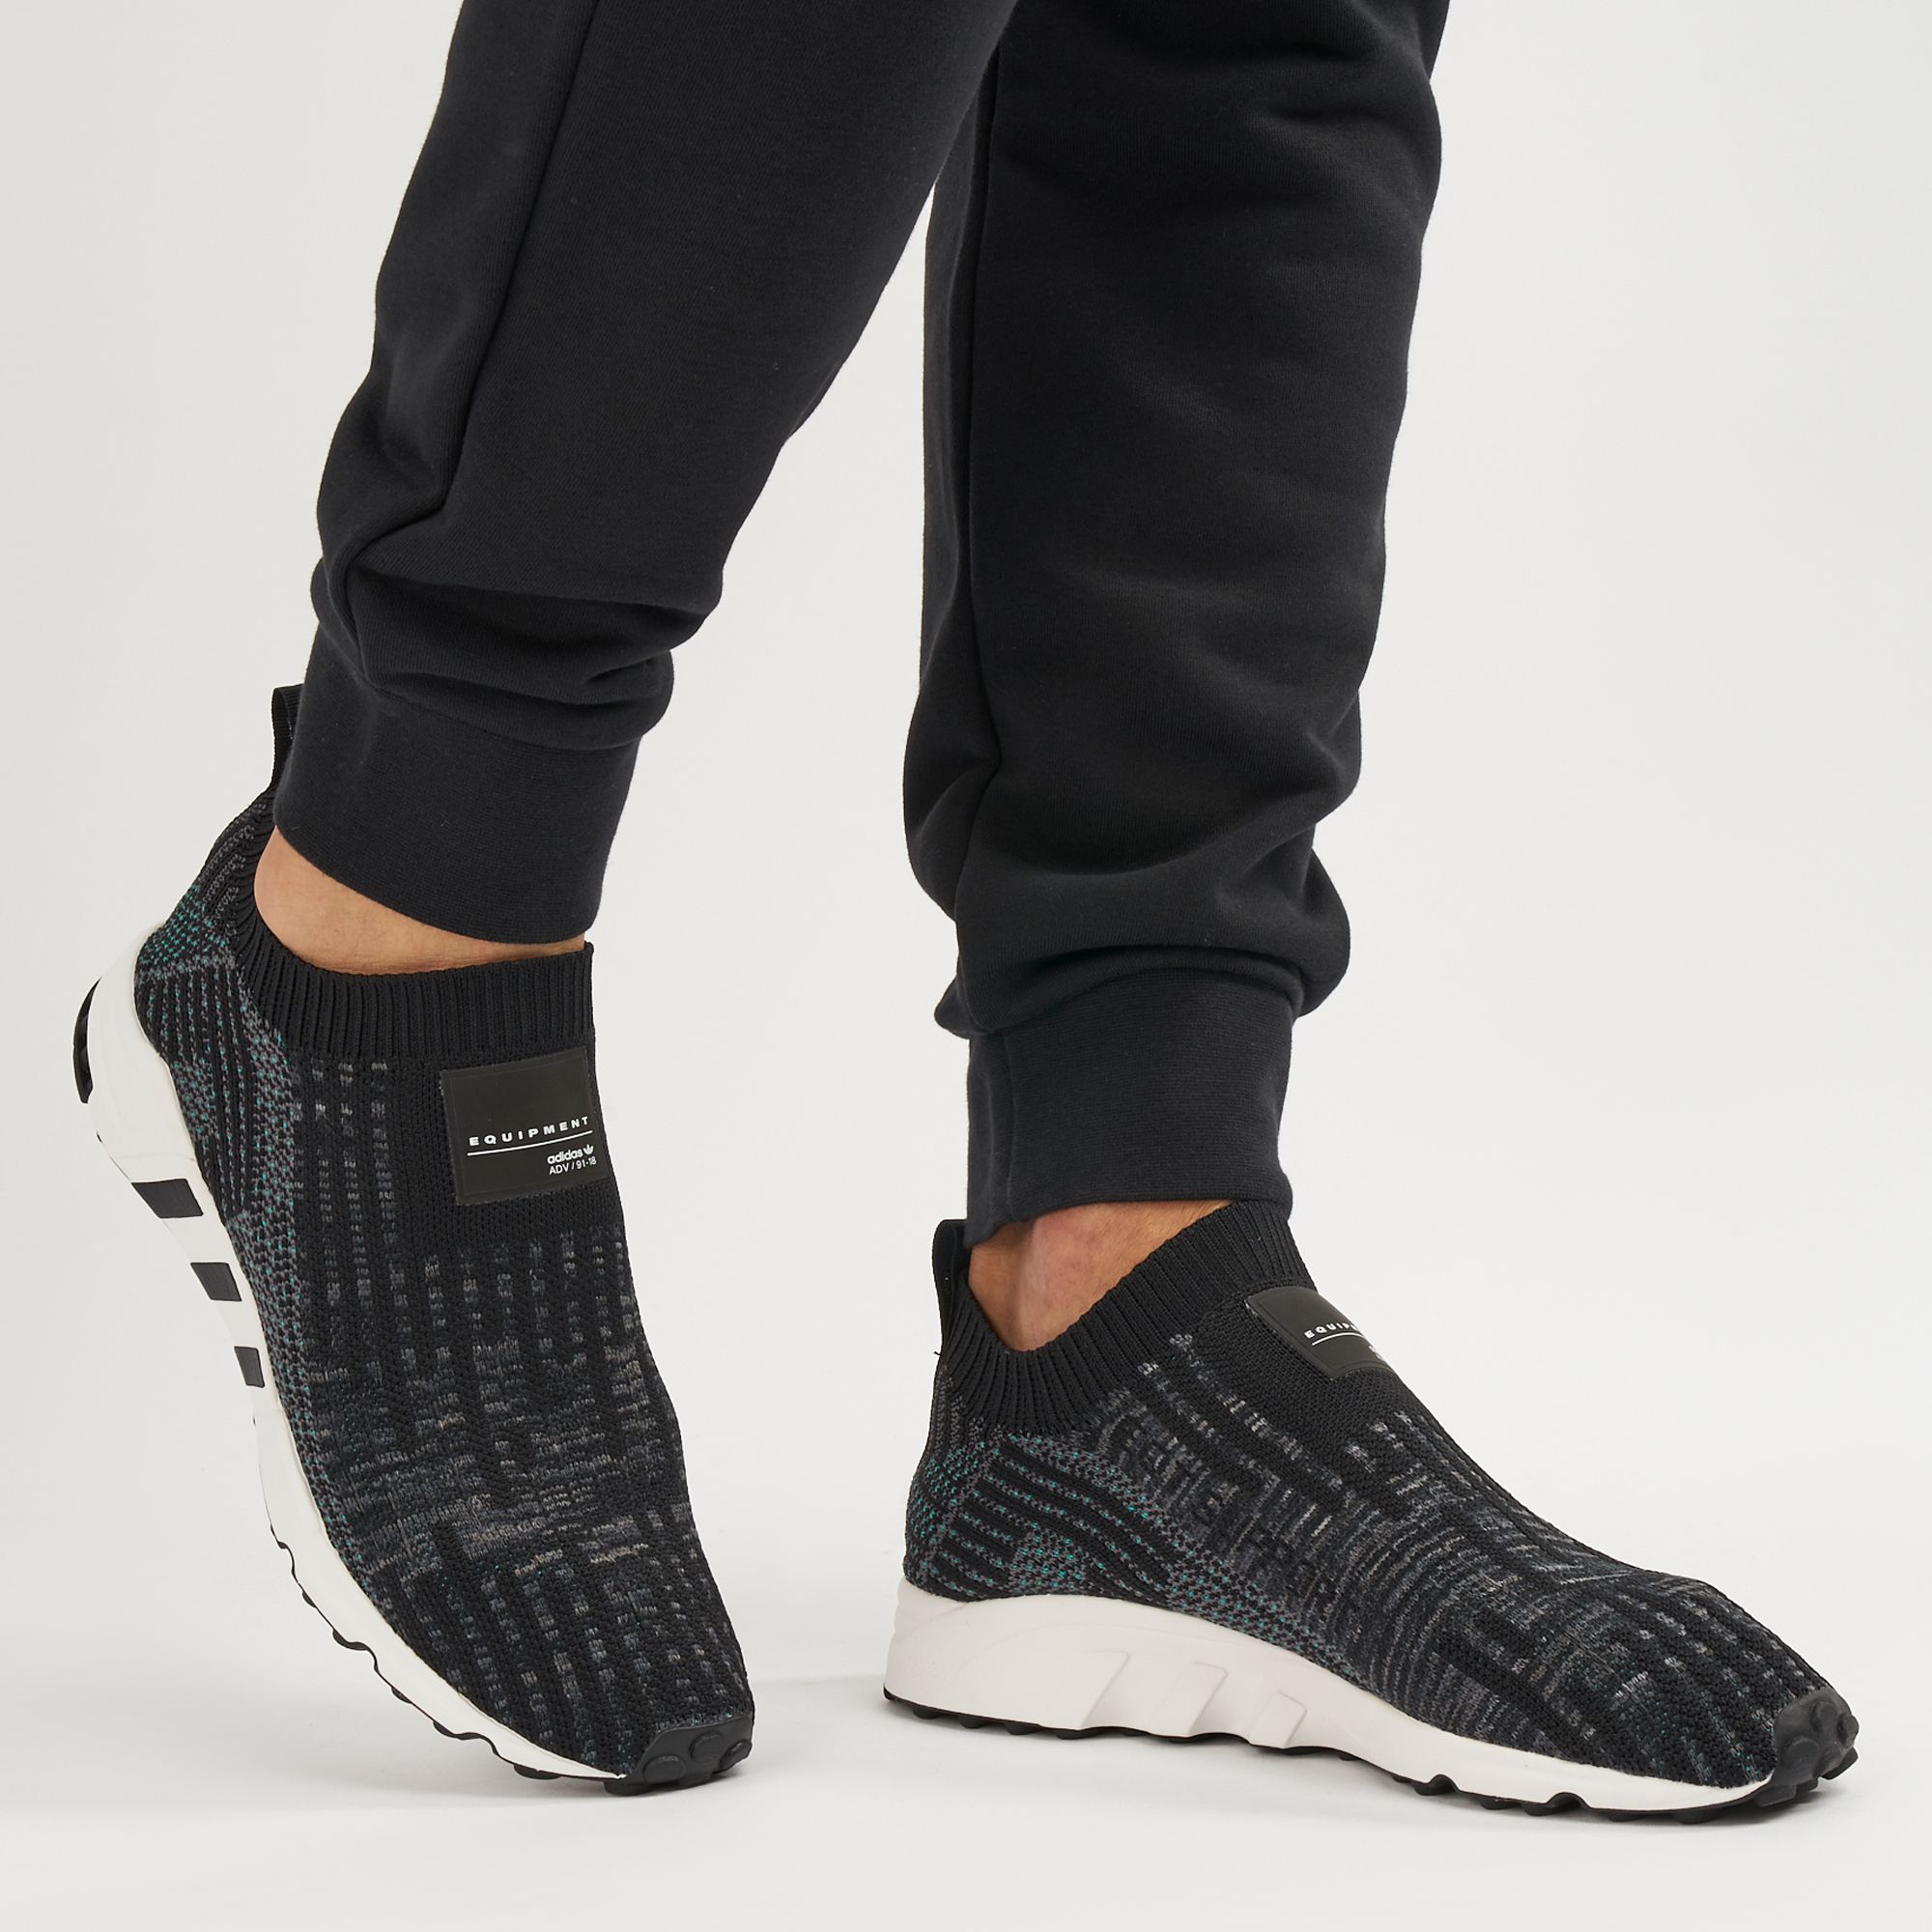 adidas primeknit sock shoes